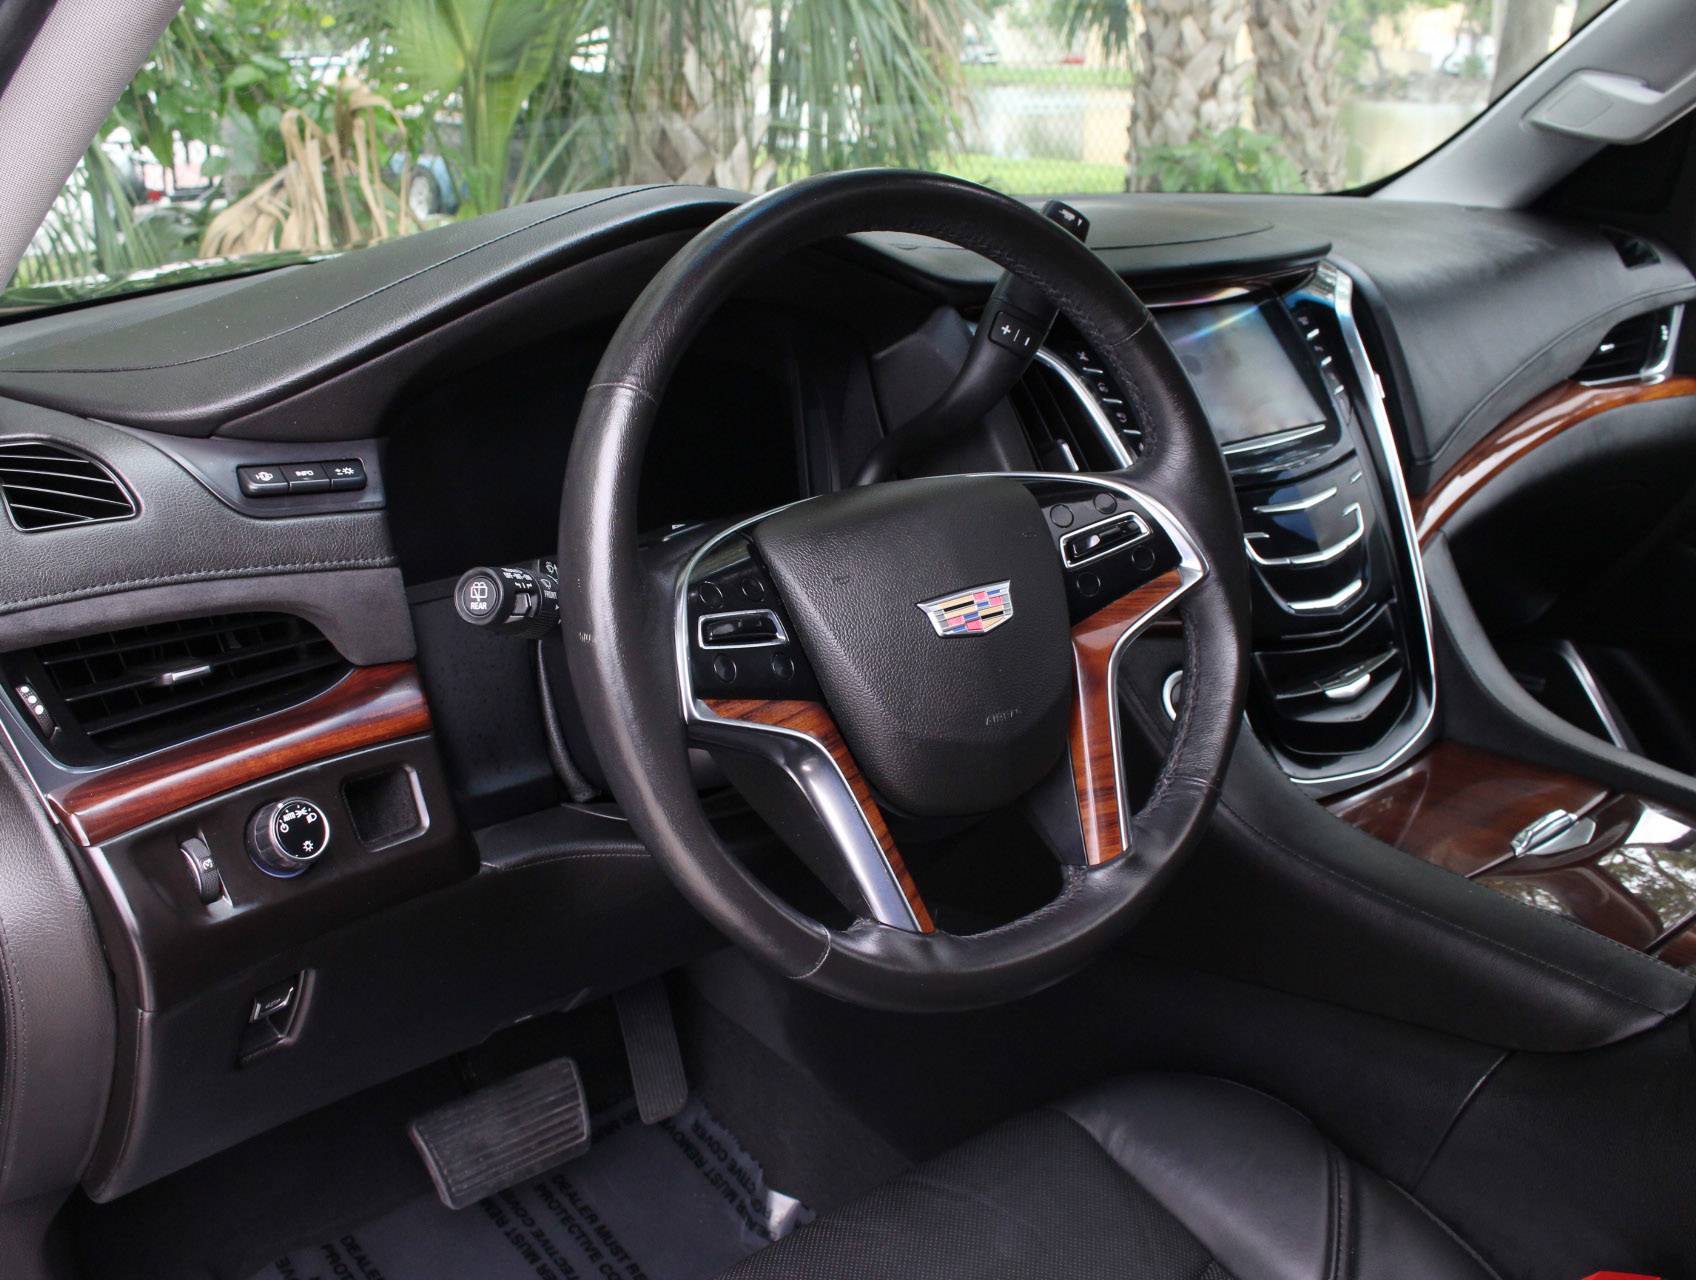 Florida Fine Cars - Used CADILLAC ESCALADE ESV 2015 MARGATE PREMIUM